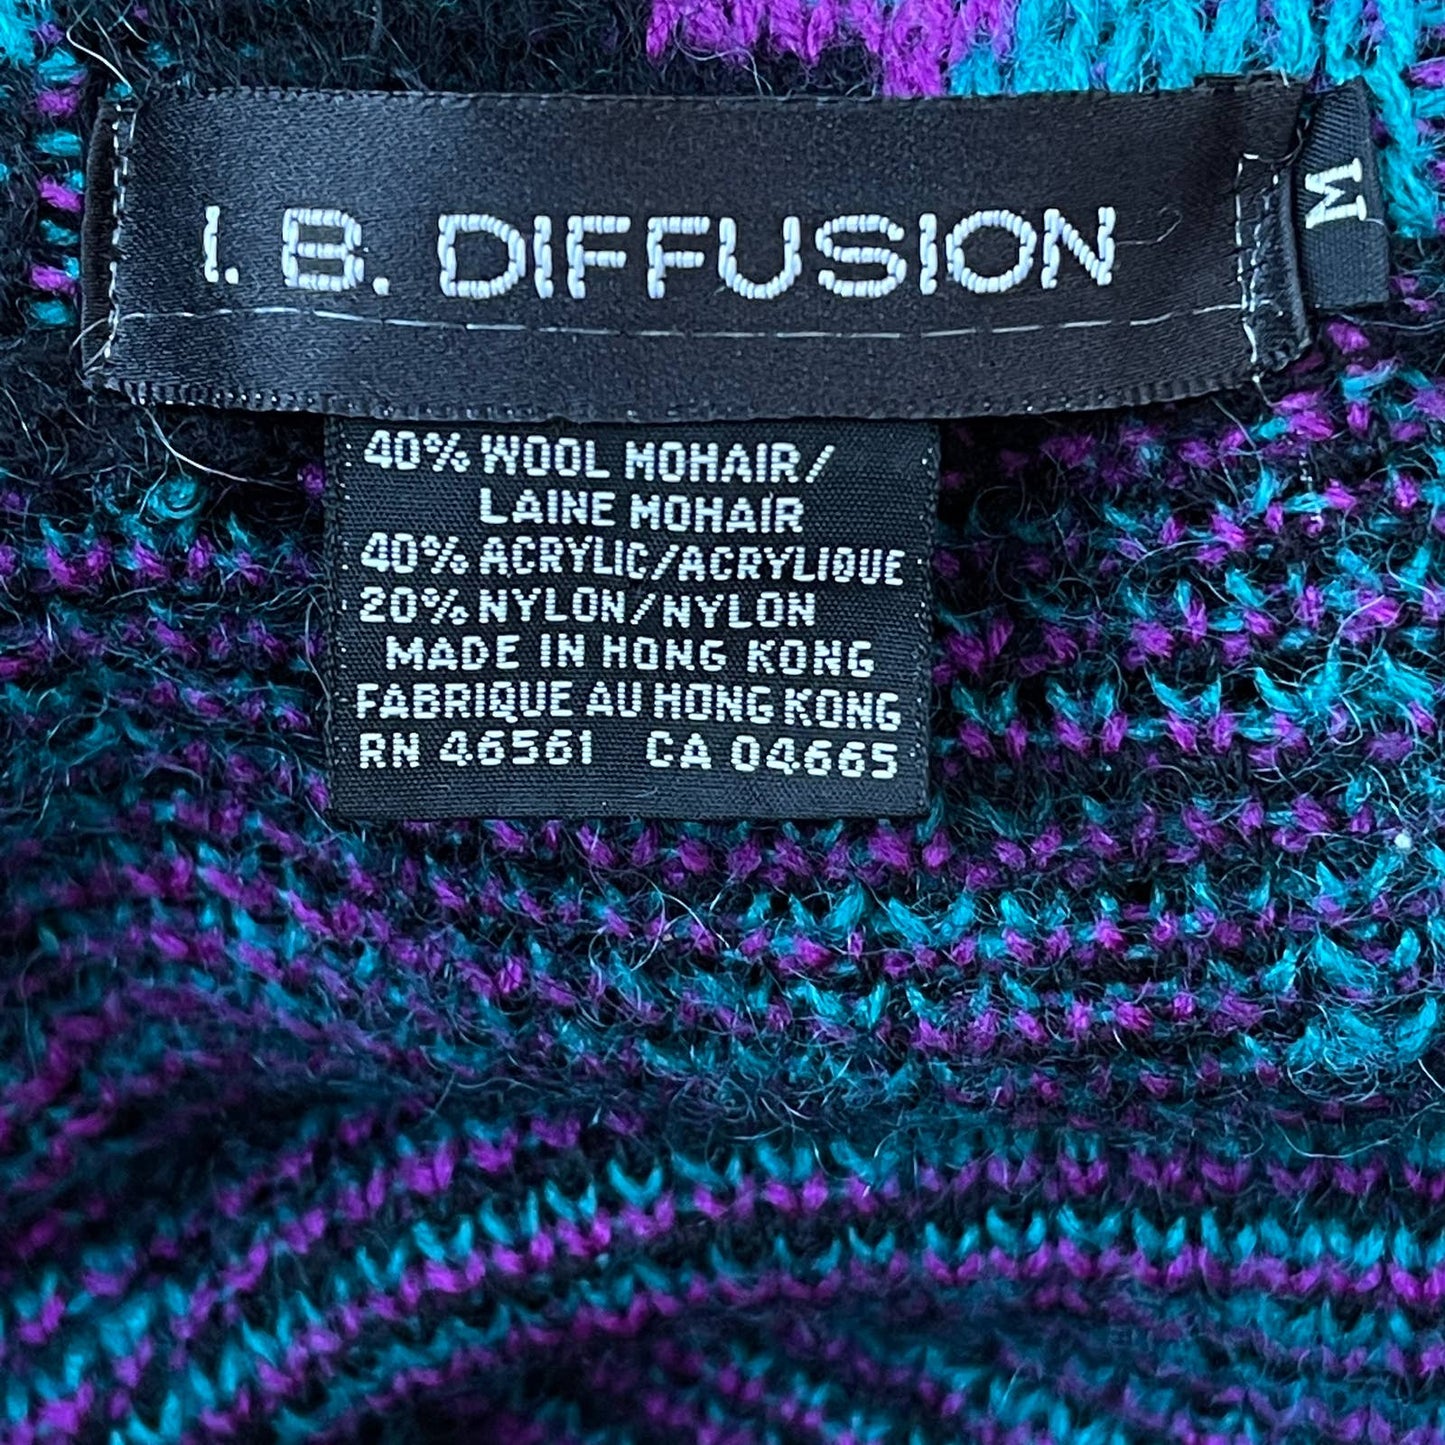 IB Diffusion Black Cardigan Sweater Coat Teal Purple Floral 80s Vtg Size M